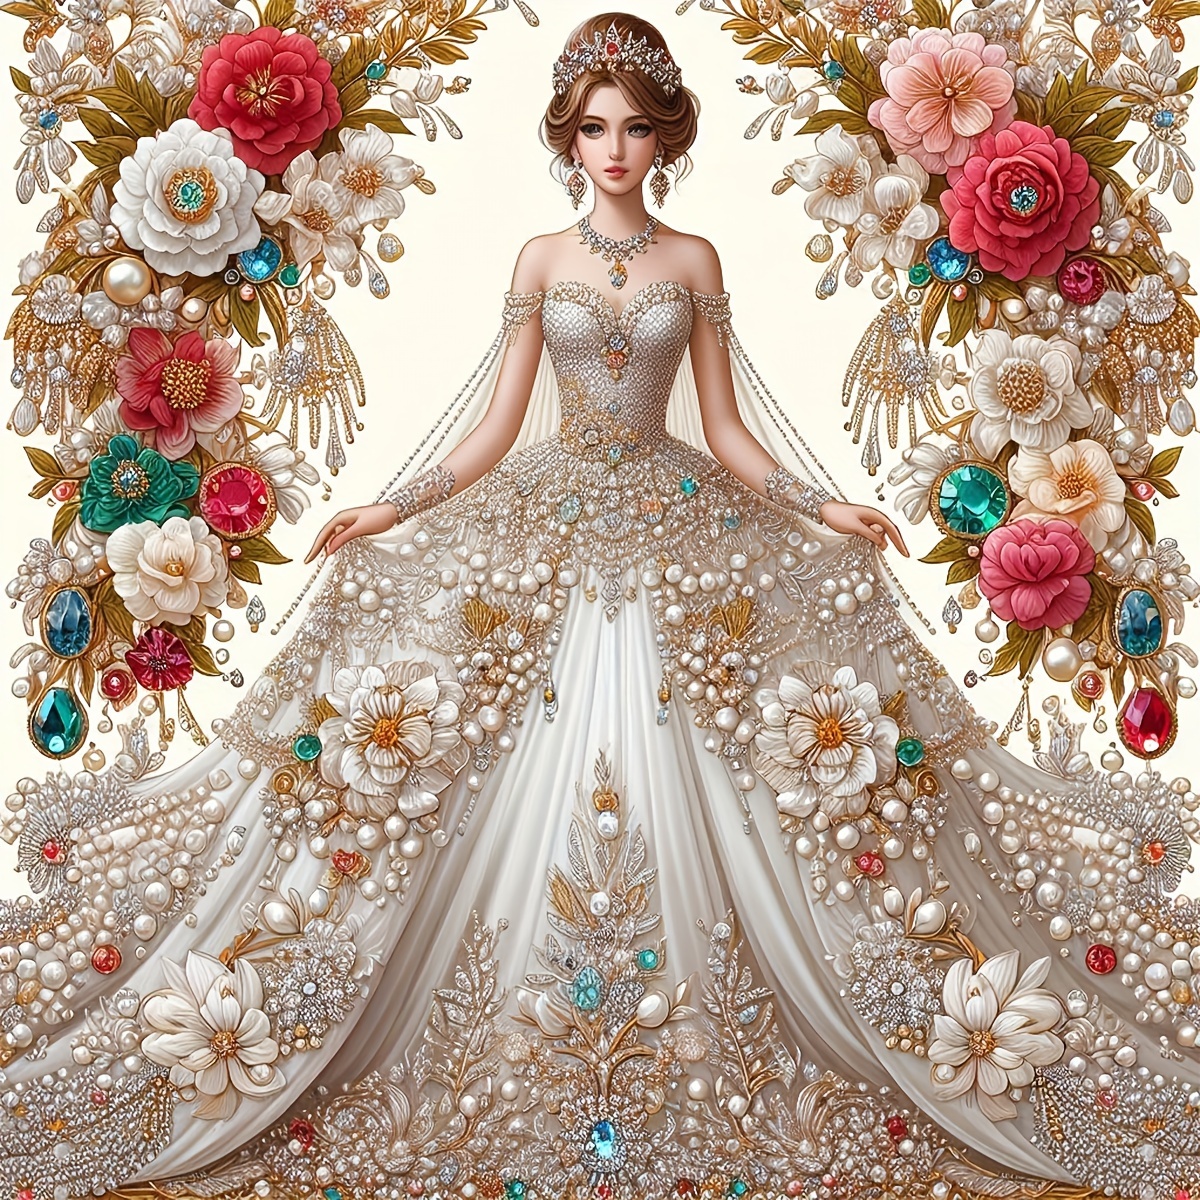 

5d Diy Diamond Painting Kit - Elegant Gown Princess Theme, Full Drill Round Diamond Art, Embroidery Mosaic Craft Kit, Creative Handmade Gift, Home Decor Wall Art, 30x30cm/11.8x11.8inch